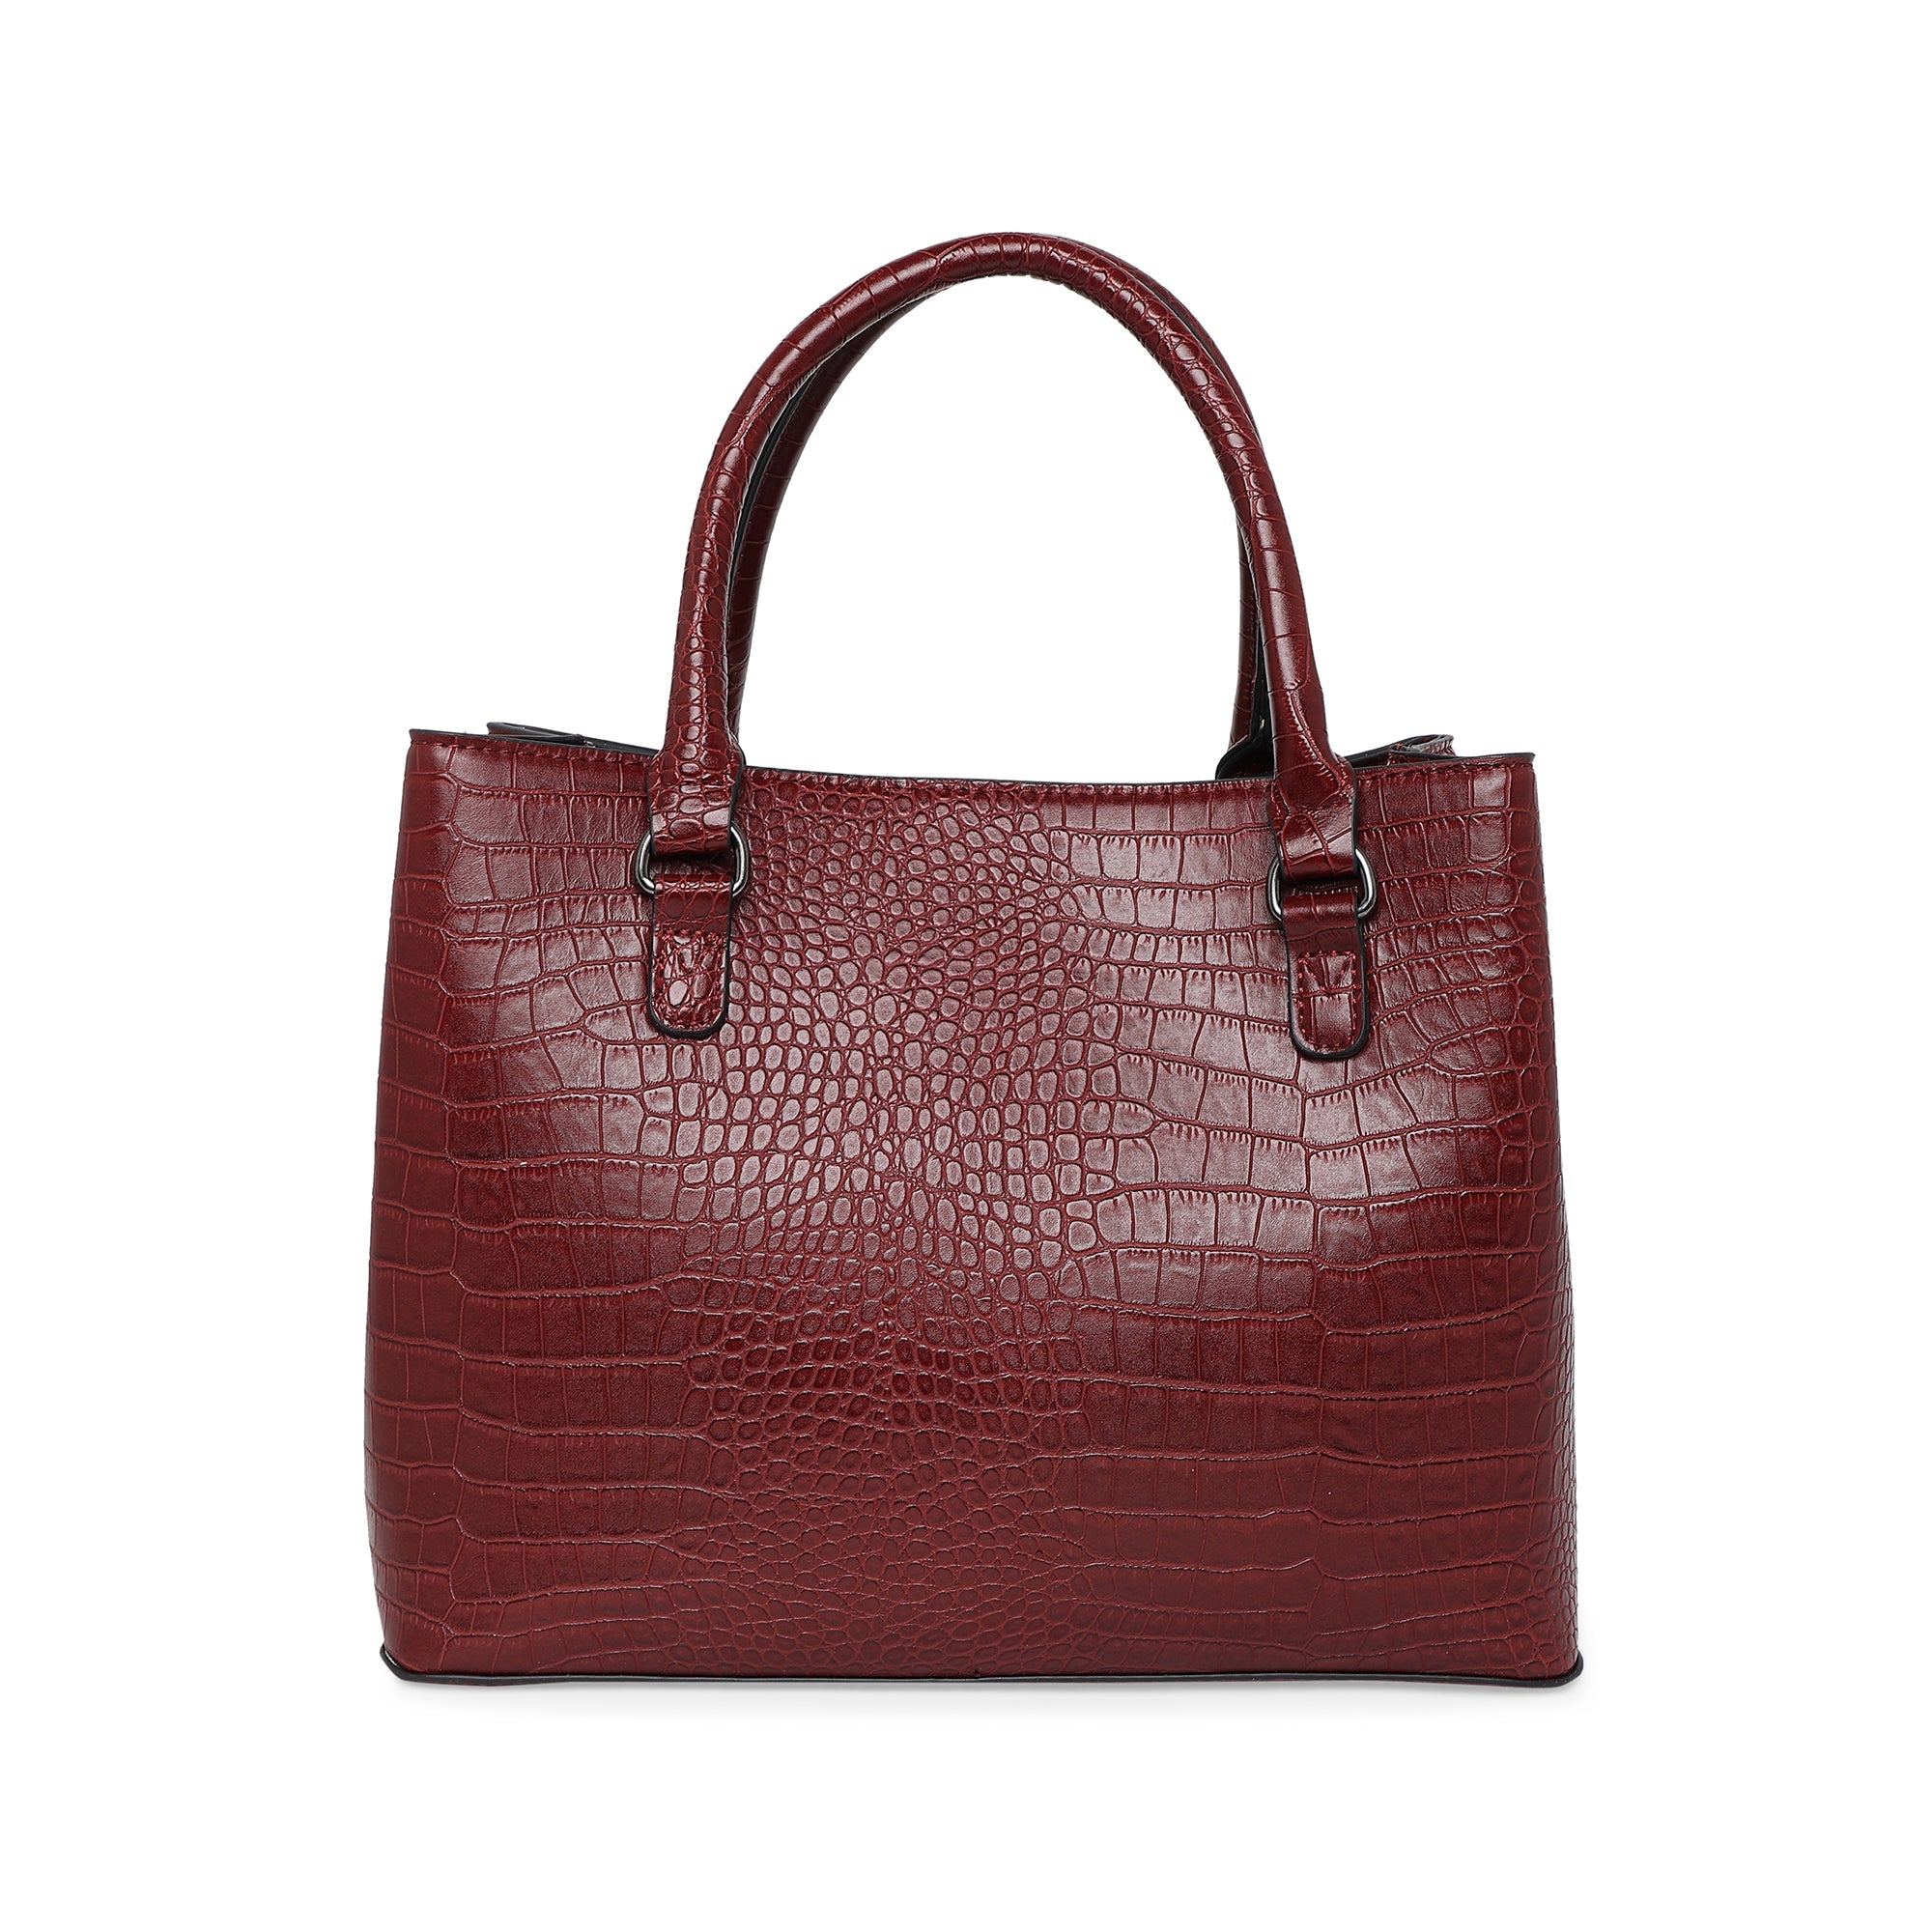 Buy Burgundy Mini Purse Sling Bag Online - Accessorize India